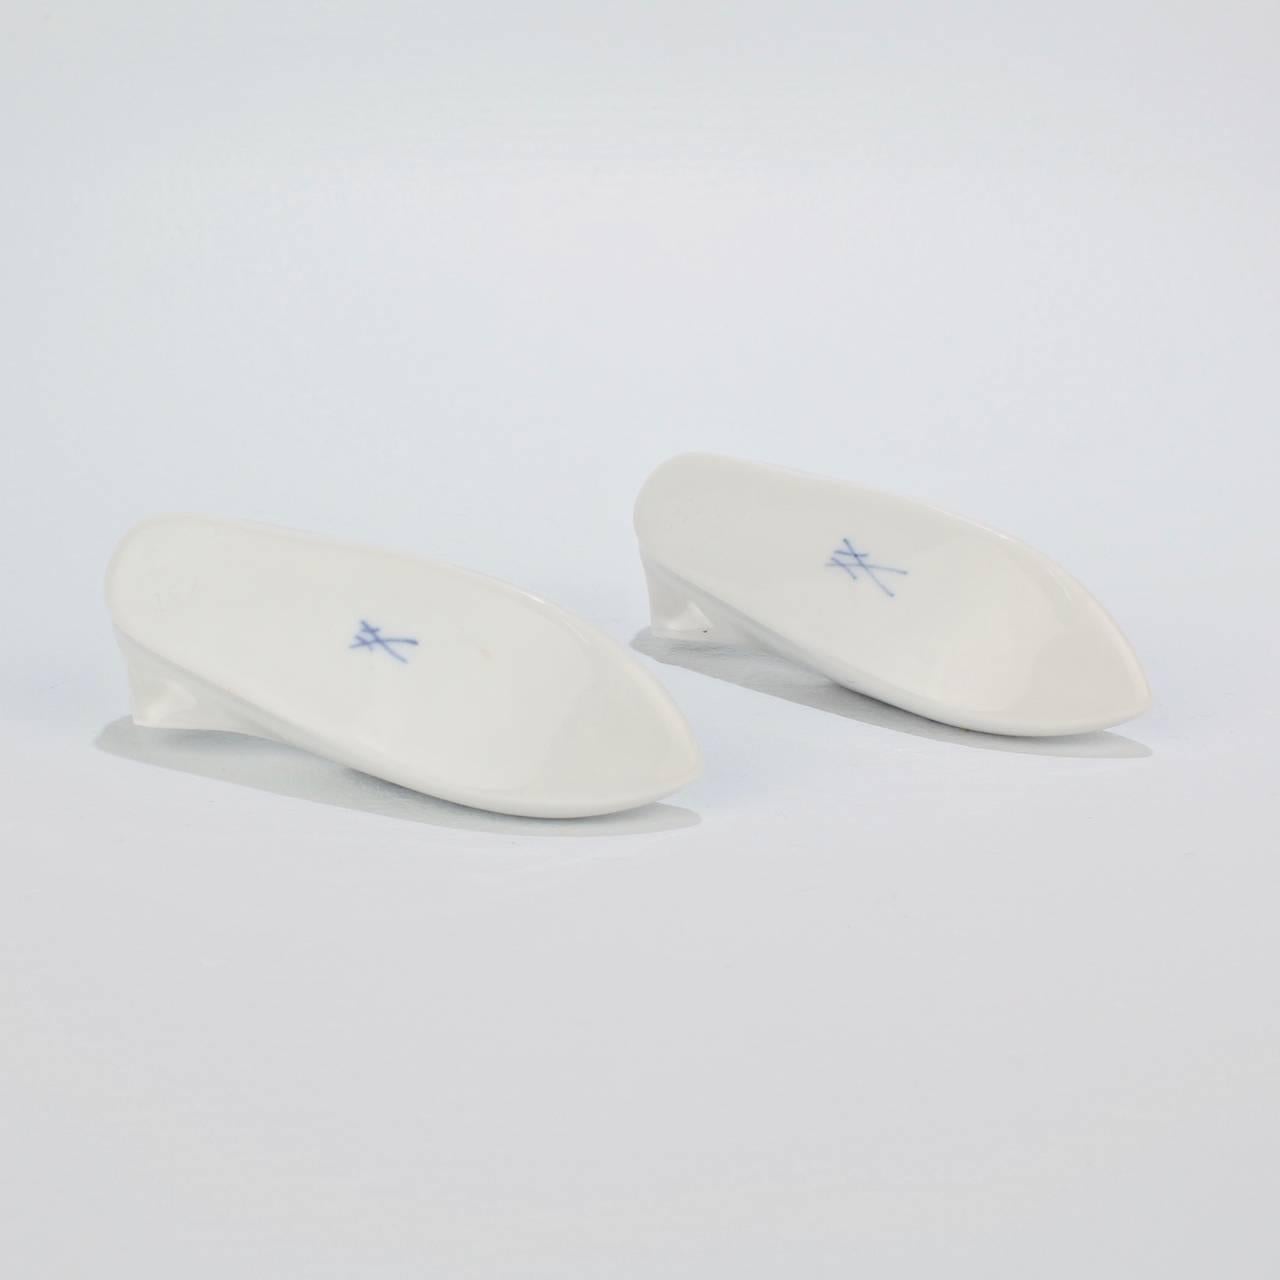 Two Vintage Meissen Porcelain Blue Onion Shoe or Slipper Form Paperweights 2